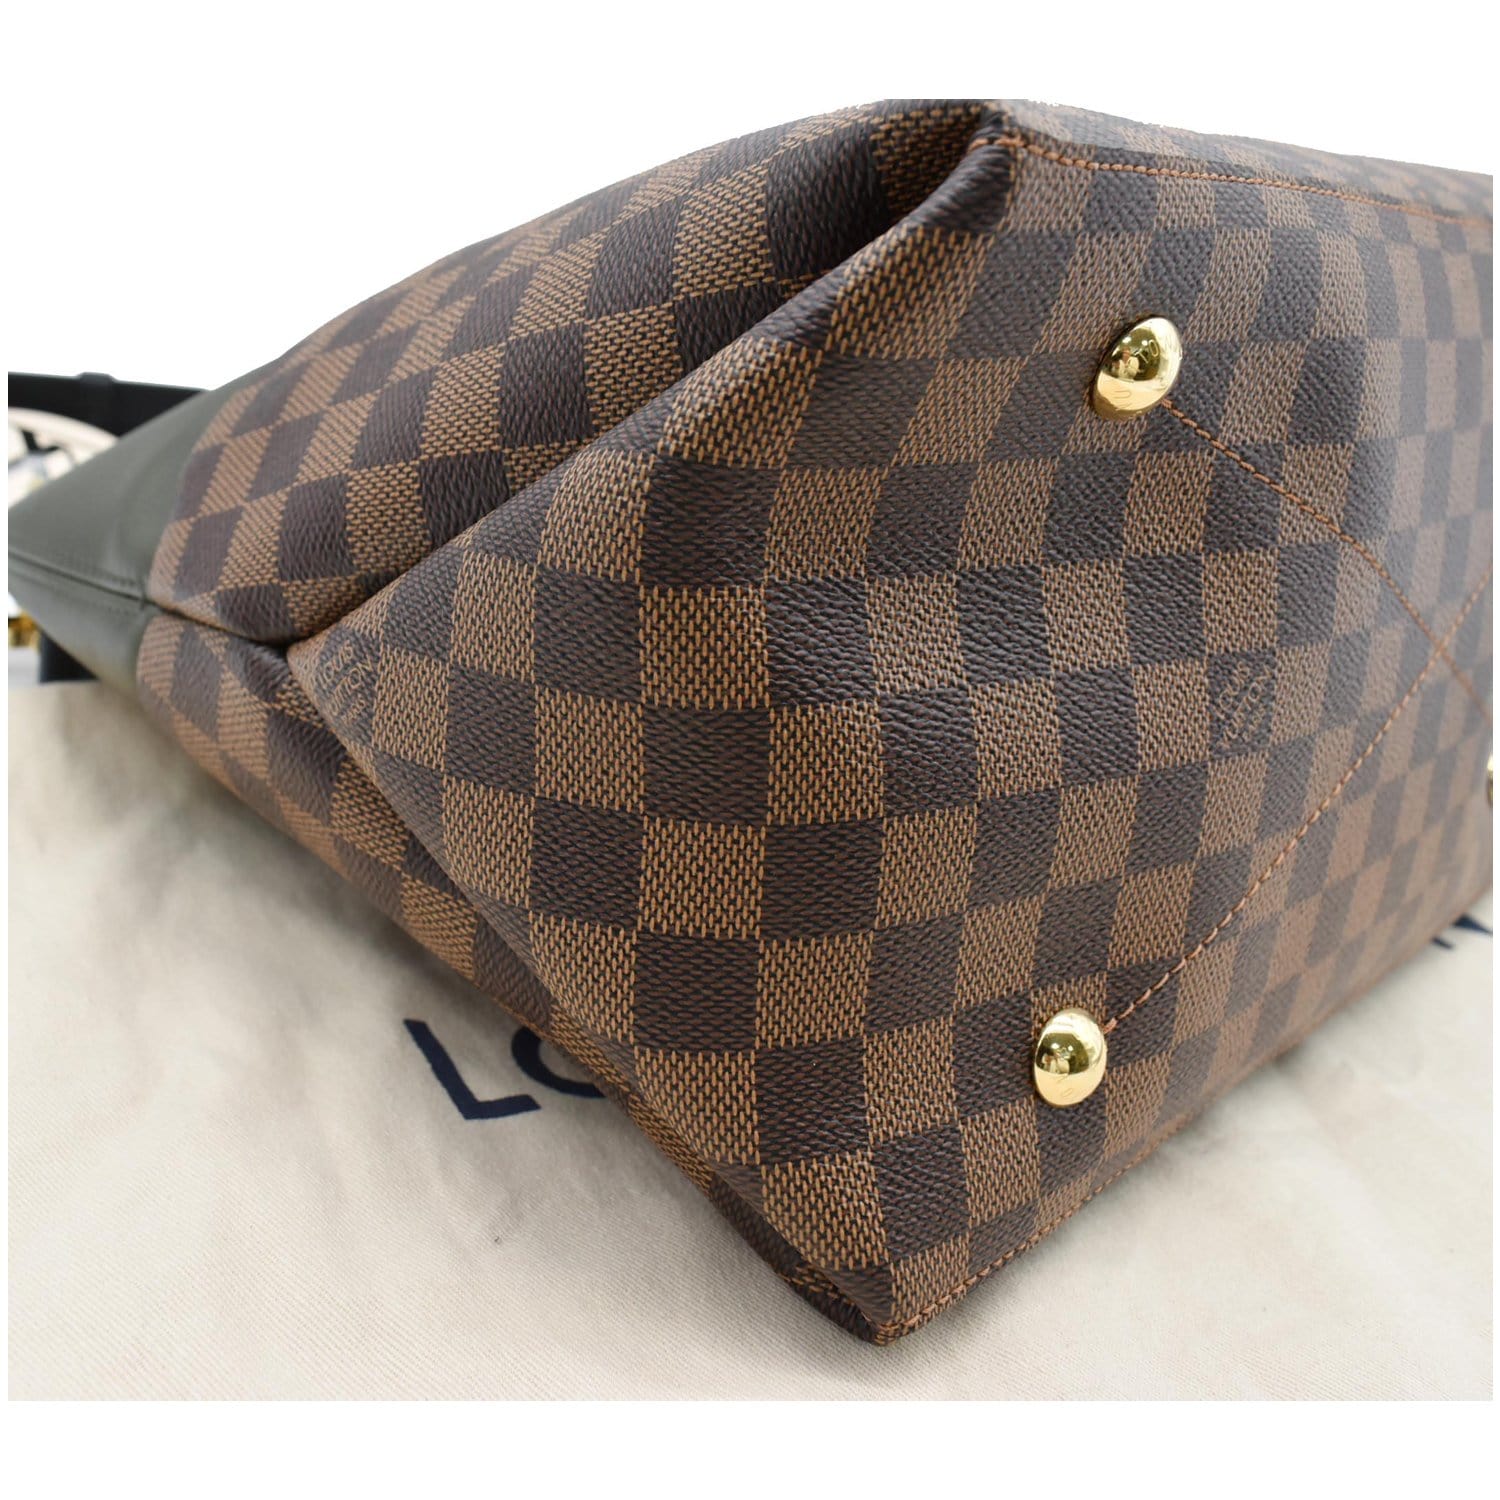 Louis Vuitton Damier Ebene Maida Hobo - Handbag | Pre-owned & Certified | used Second Hand | Unisex